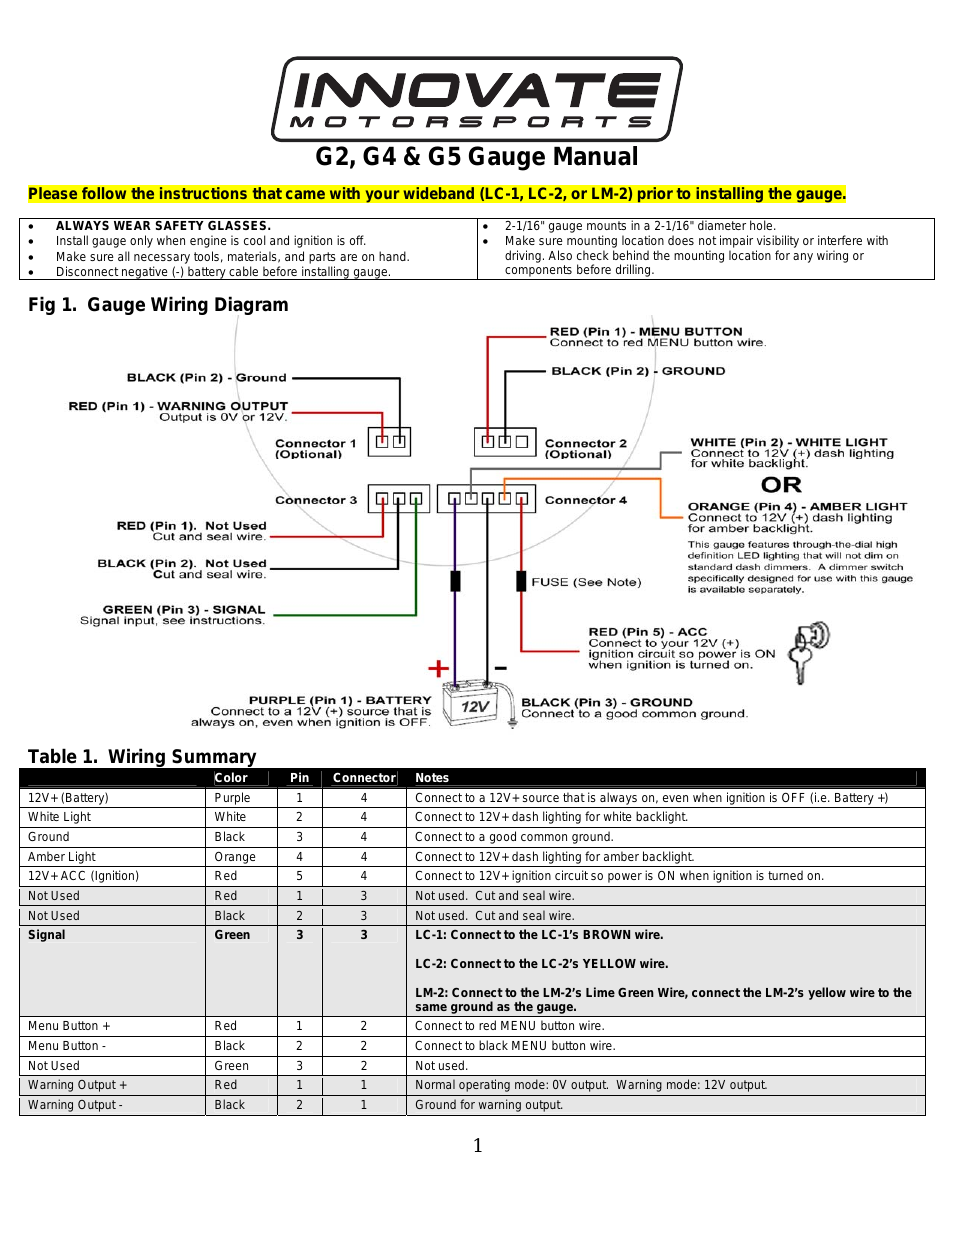 G2/G4/G5 Air/Fuel Gauge Manual (four connector model)